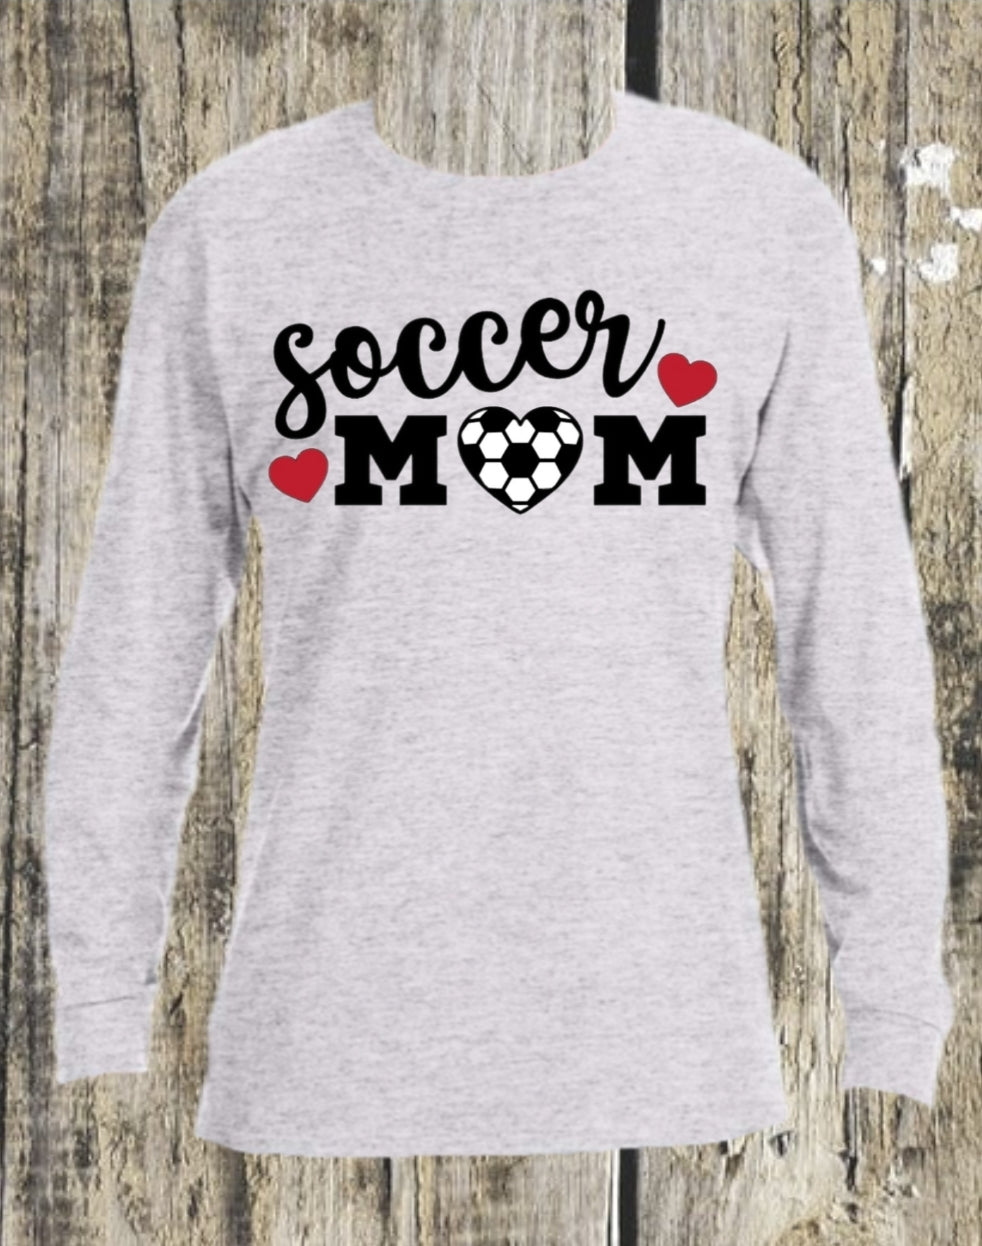 Soccer Mom (#3)